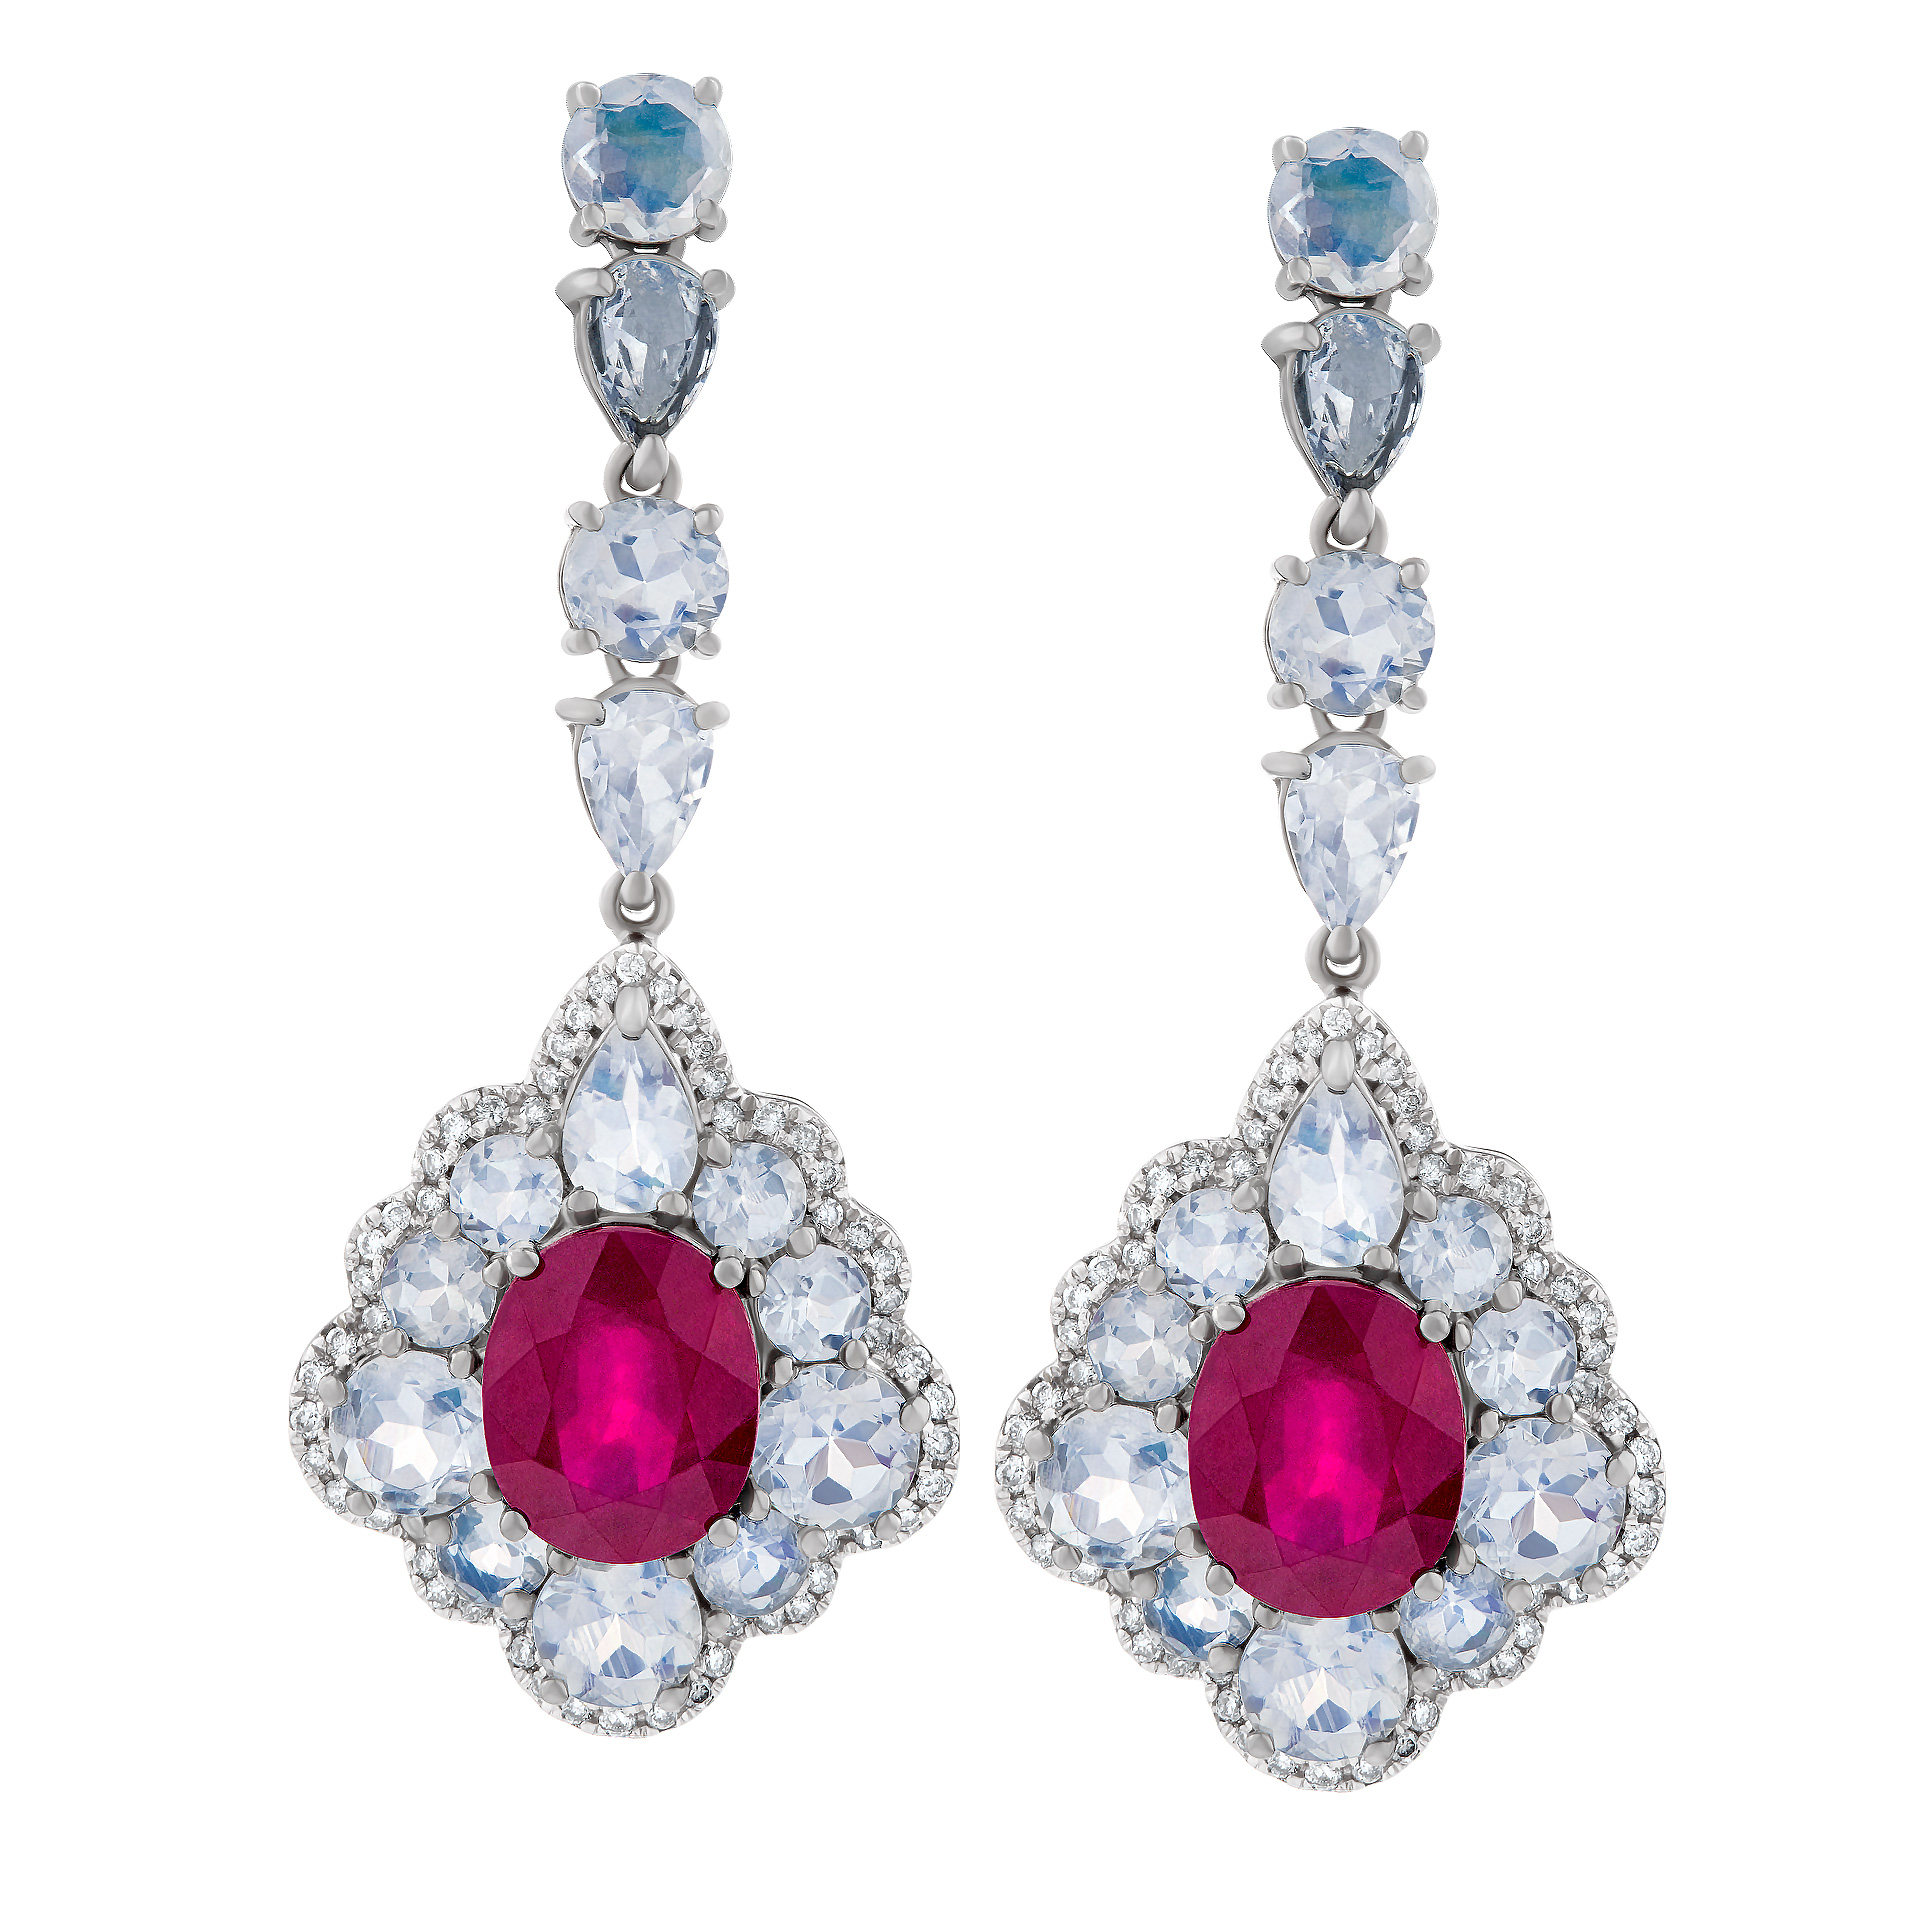 Ruby, diamond and moonstone earrings n 18k white gold